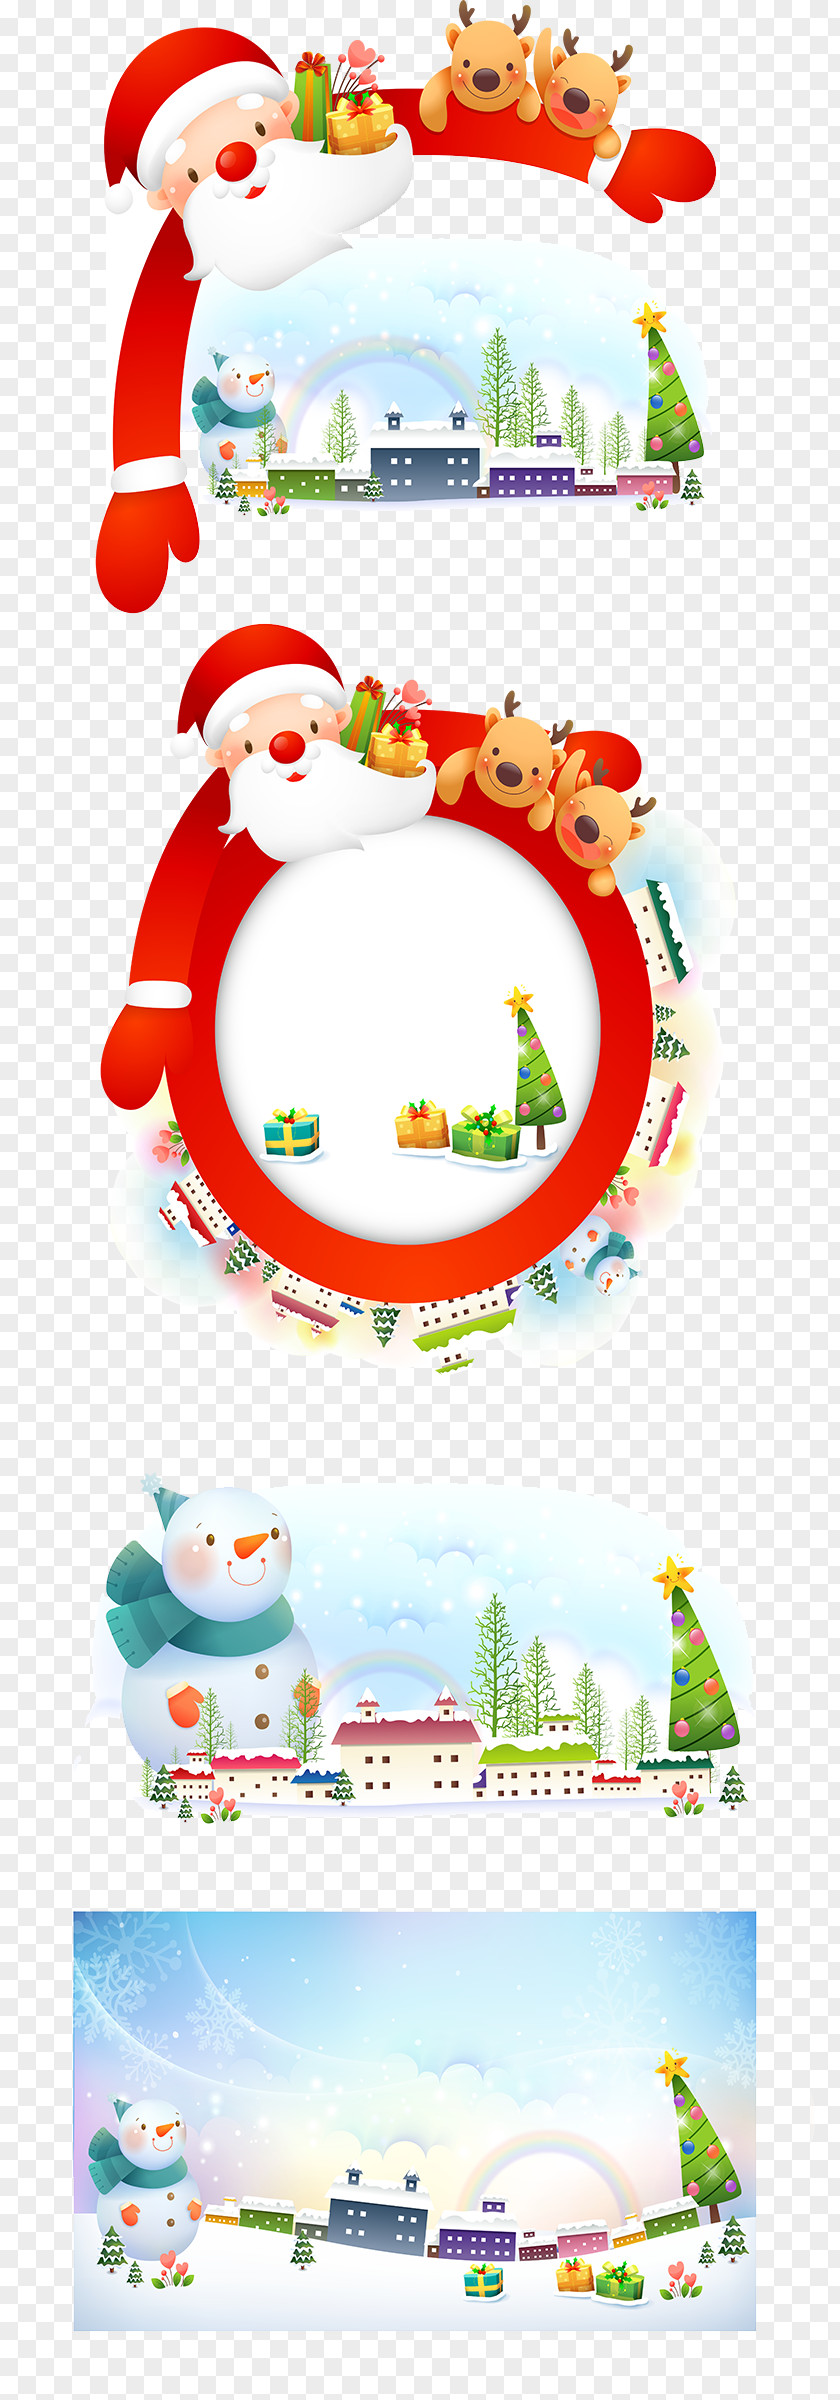 Santa Claus Decorative Borders Vector Material Christmas Euclidean Illustration PNG